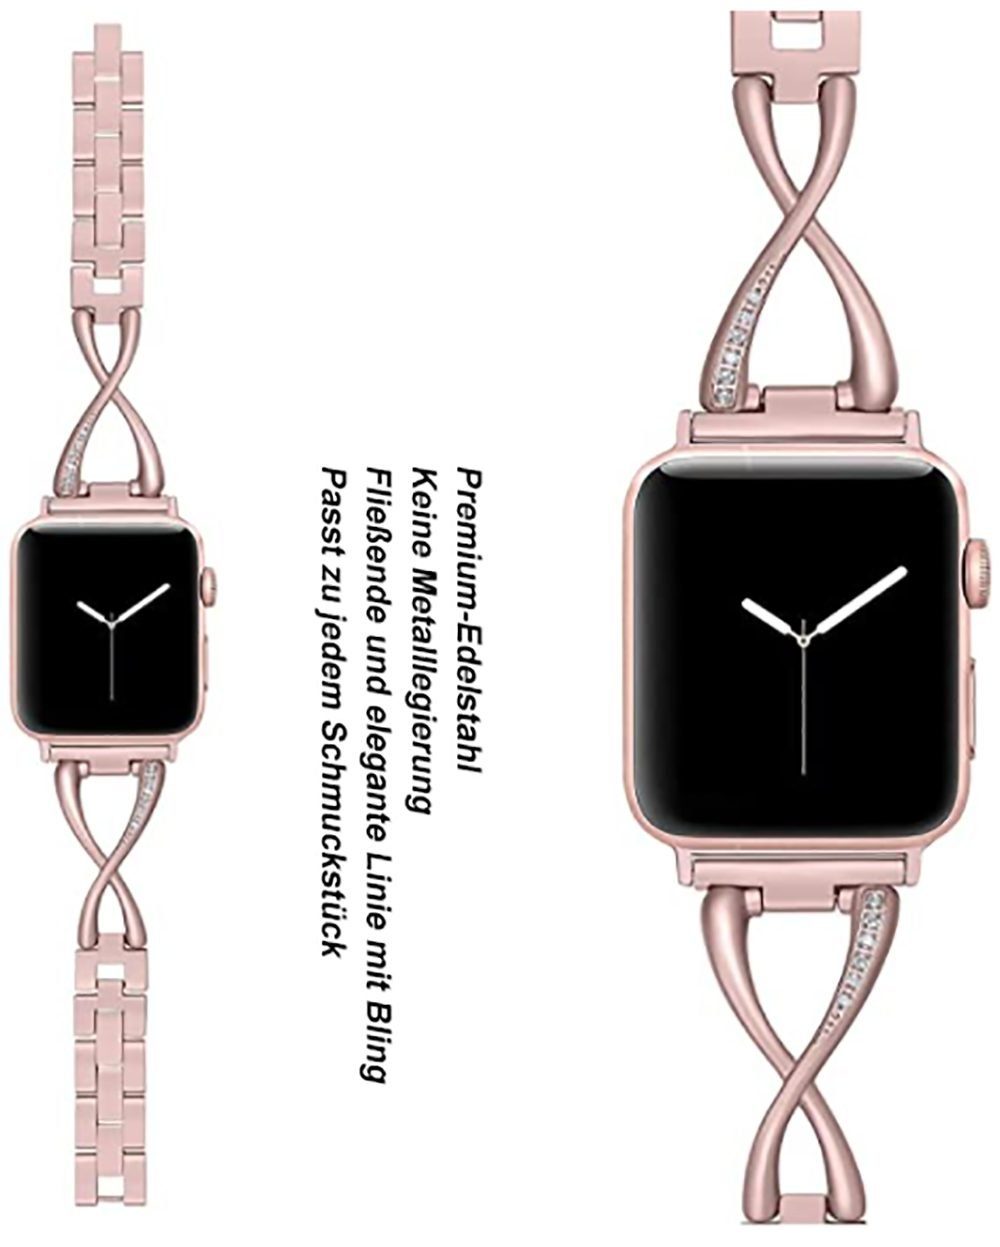 Rosa 1-7,38/40mm Band,Uhrenarmbänder,für apple Smartwatch-Armband watch Diida Watch